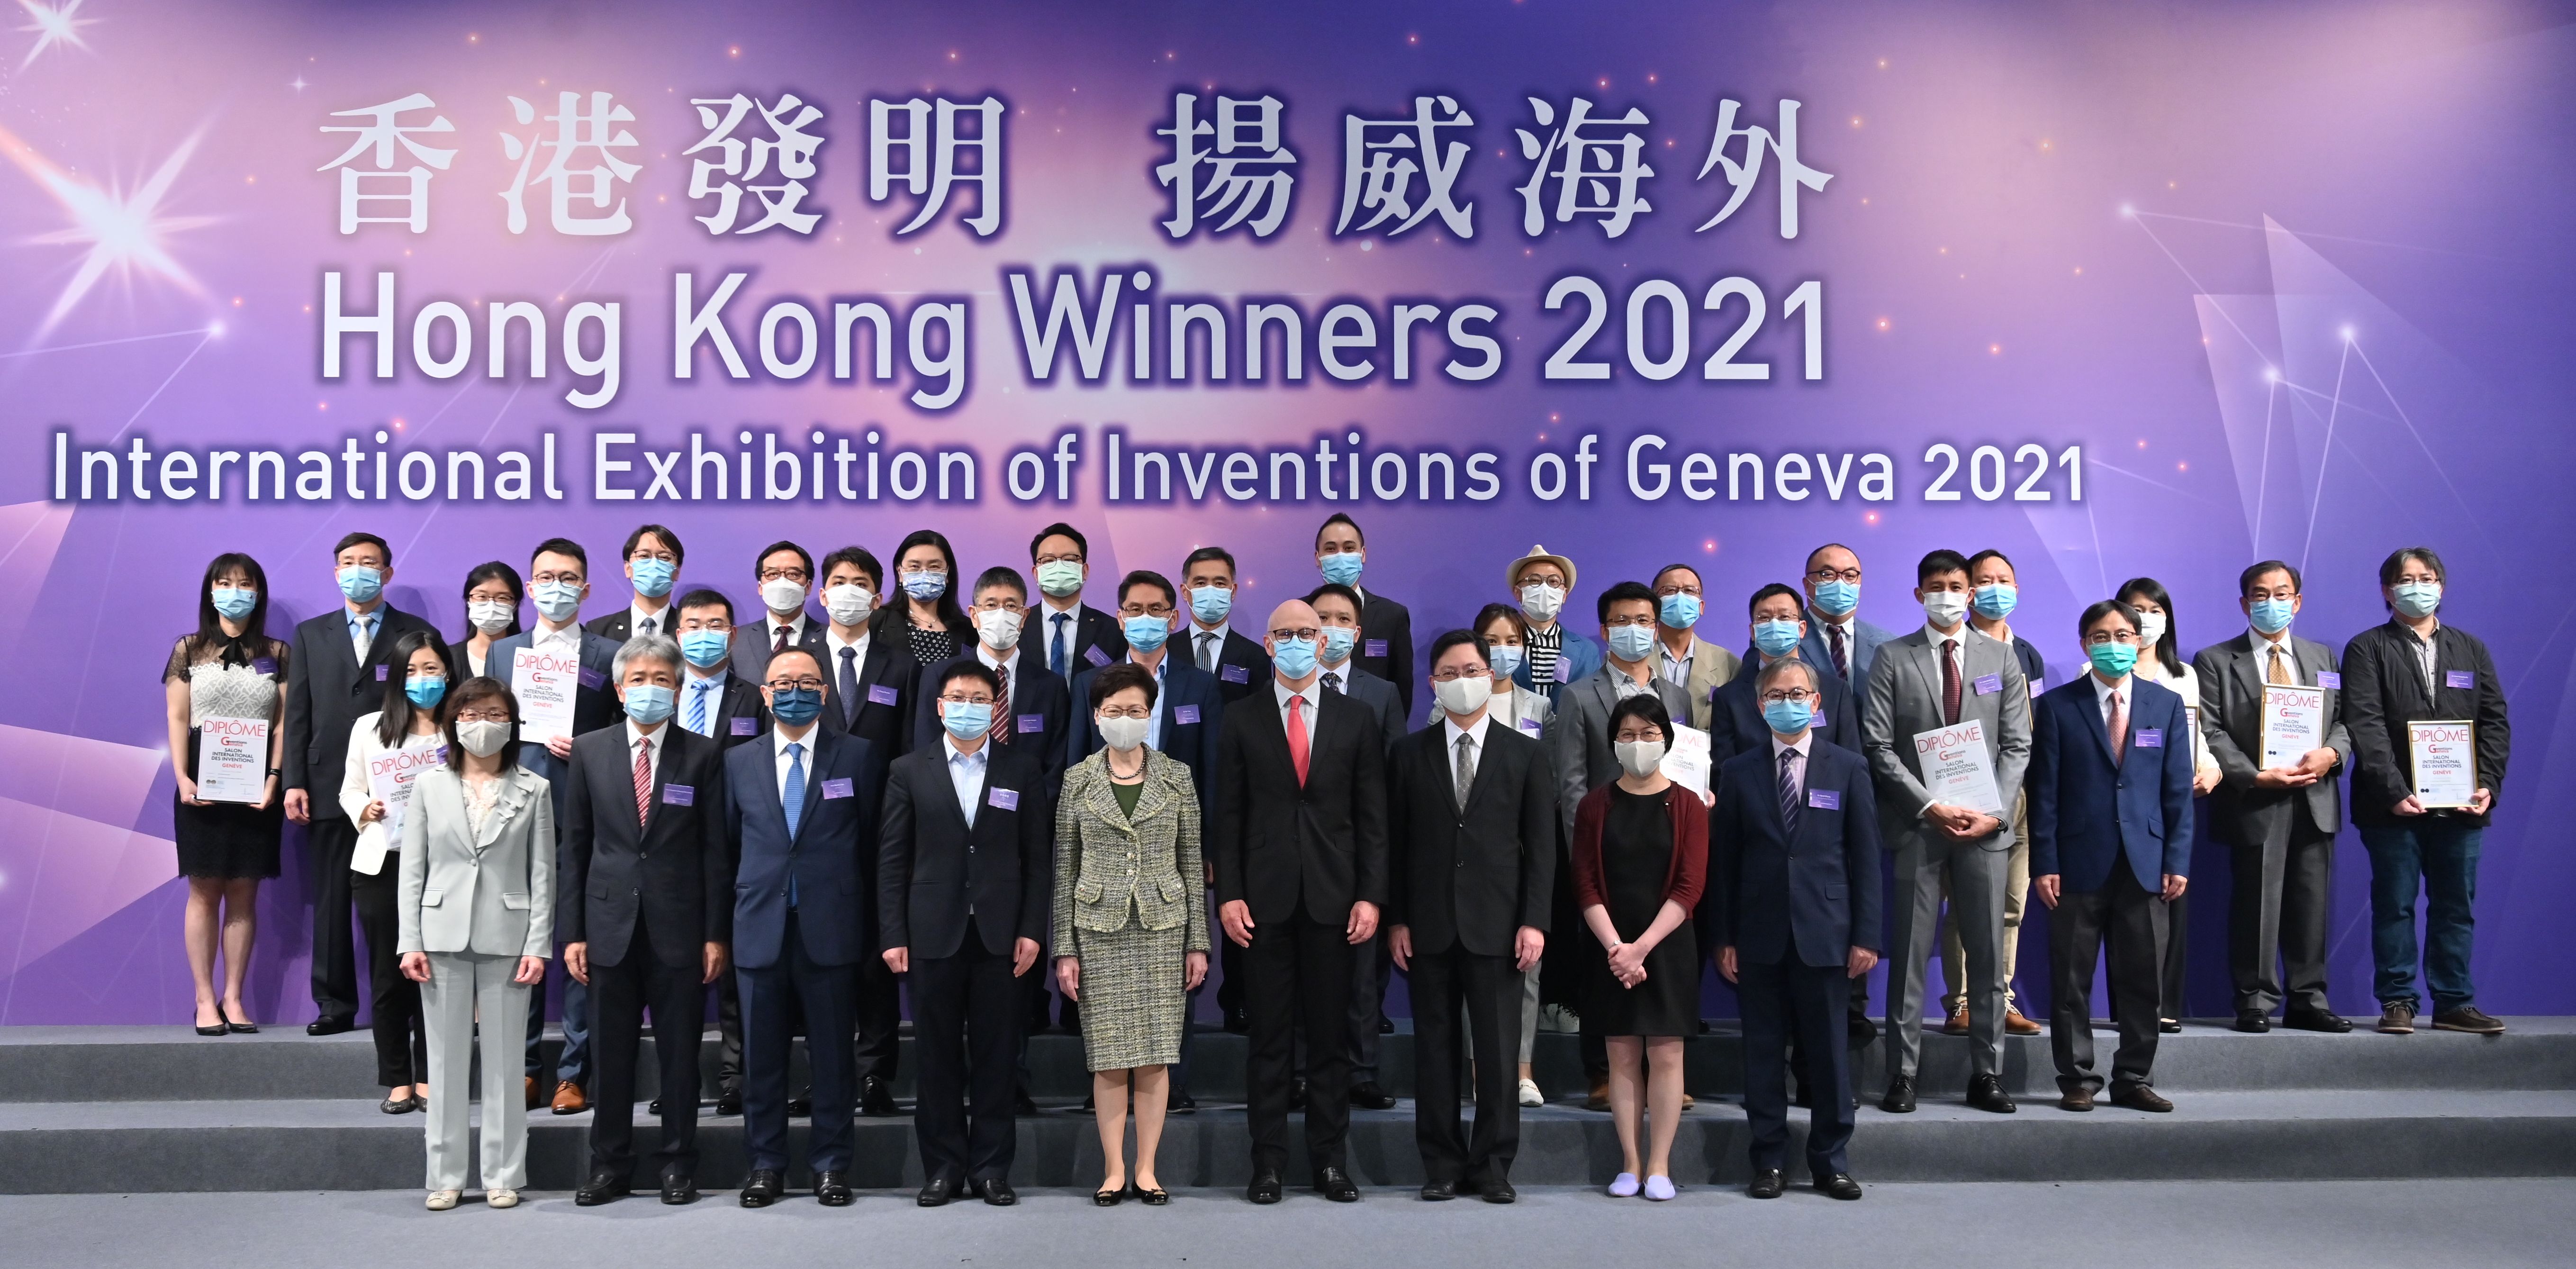 Hong Kong Winners 2021 International Exhibition of Inventions of Geneva 2021